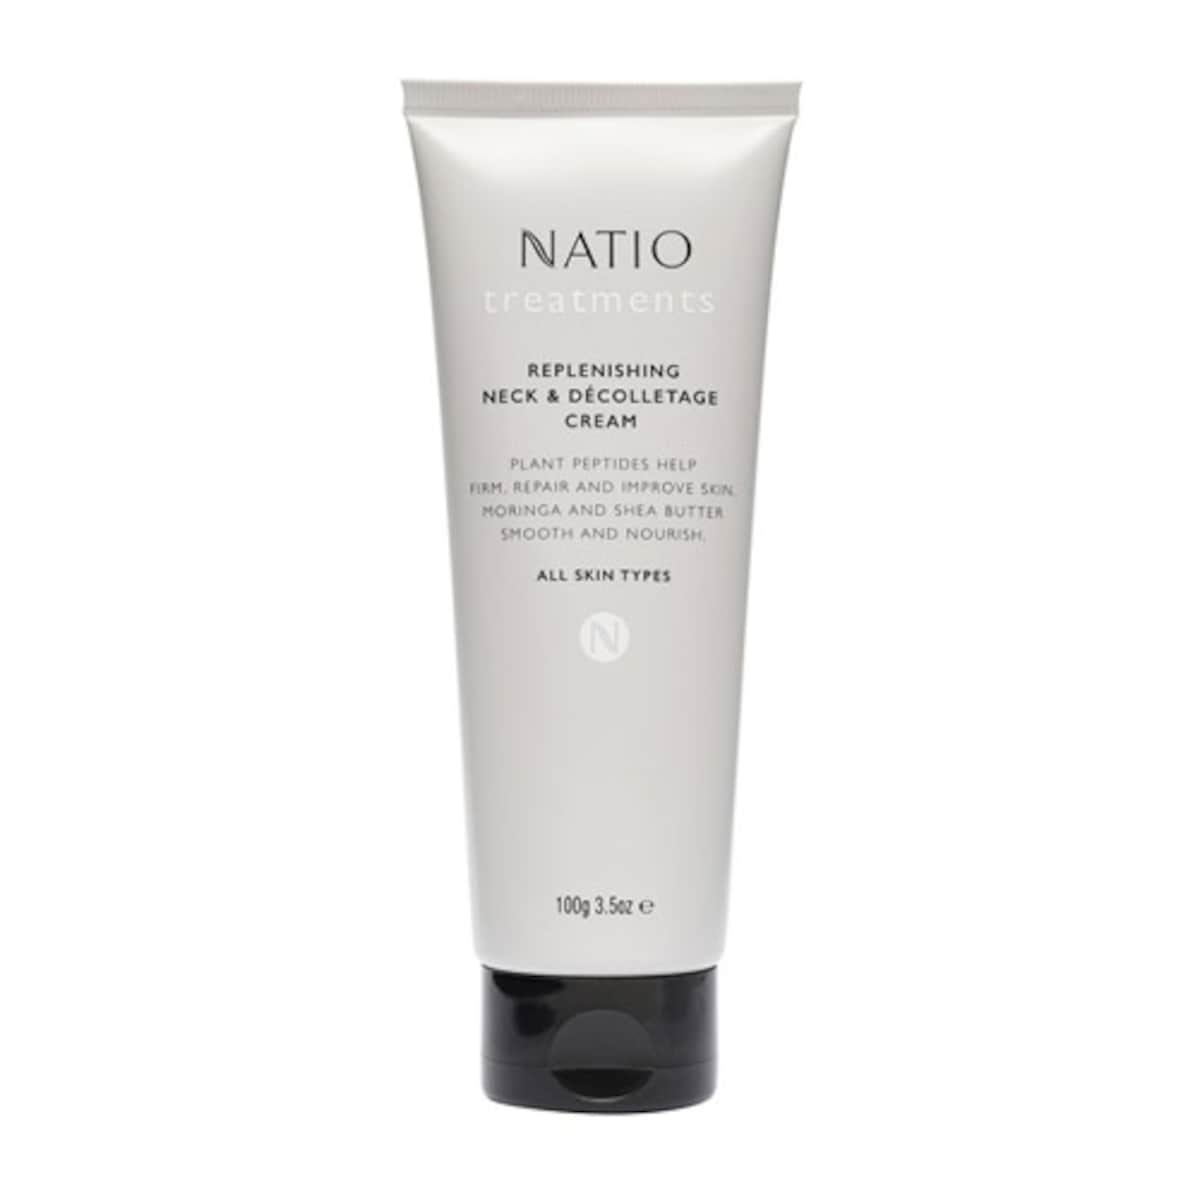 Natio Treatments Replenishing Neck & Decolletage Cream 100g